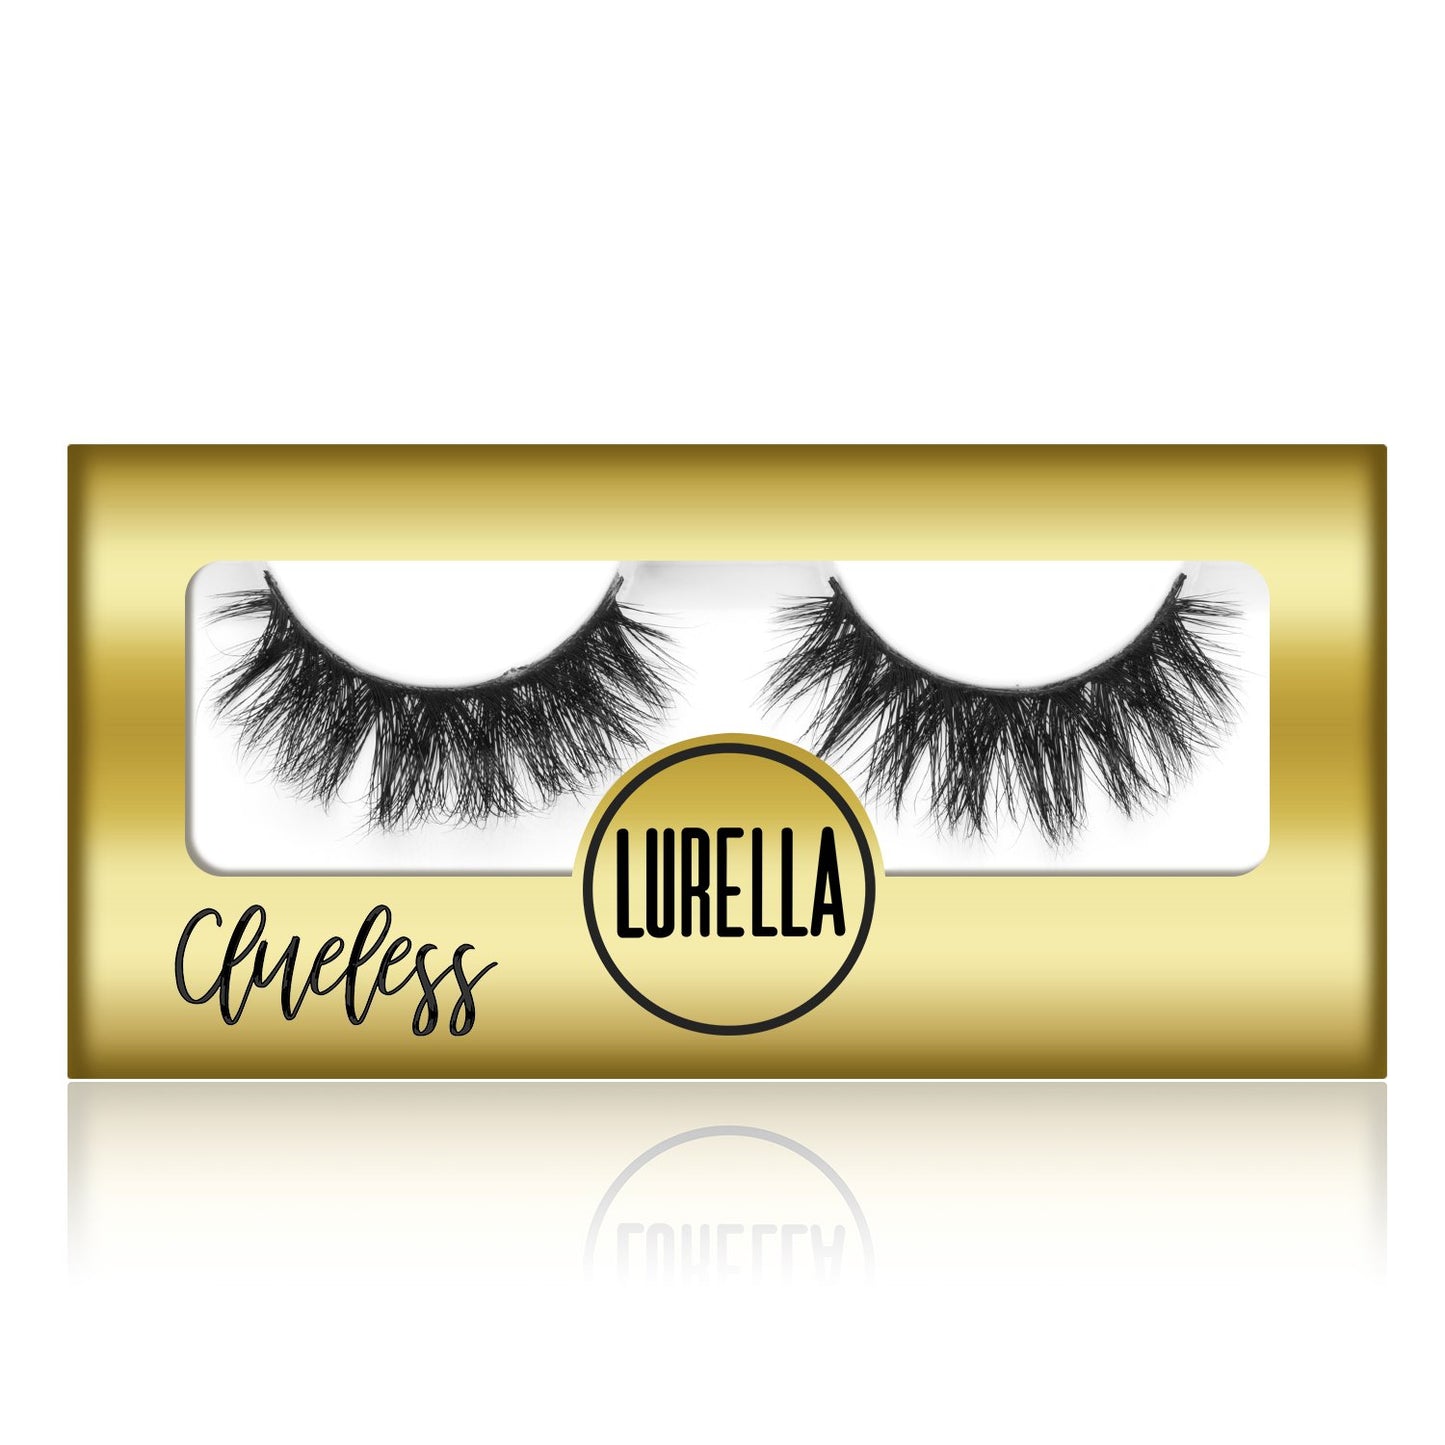 Clueless - Lurella Cosmetics